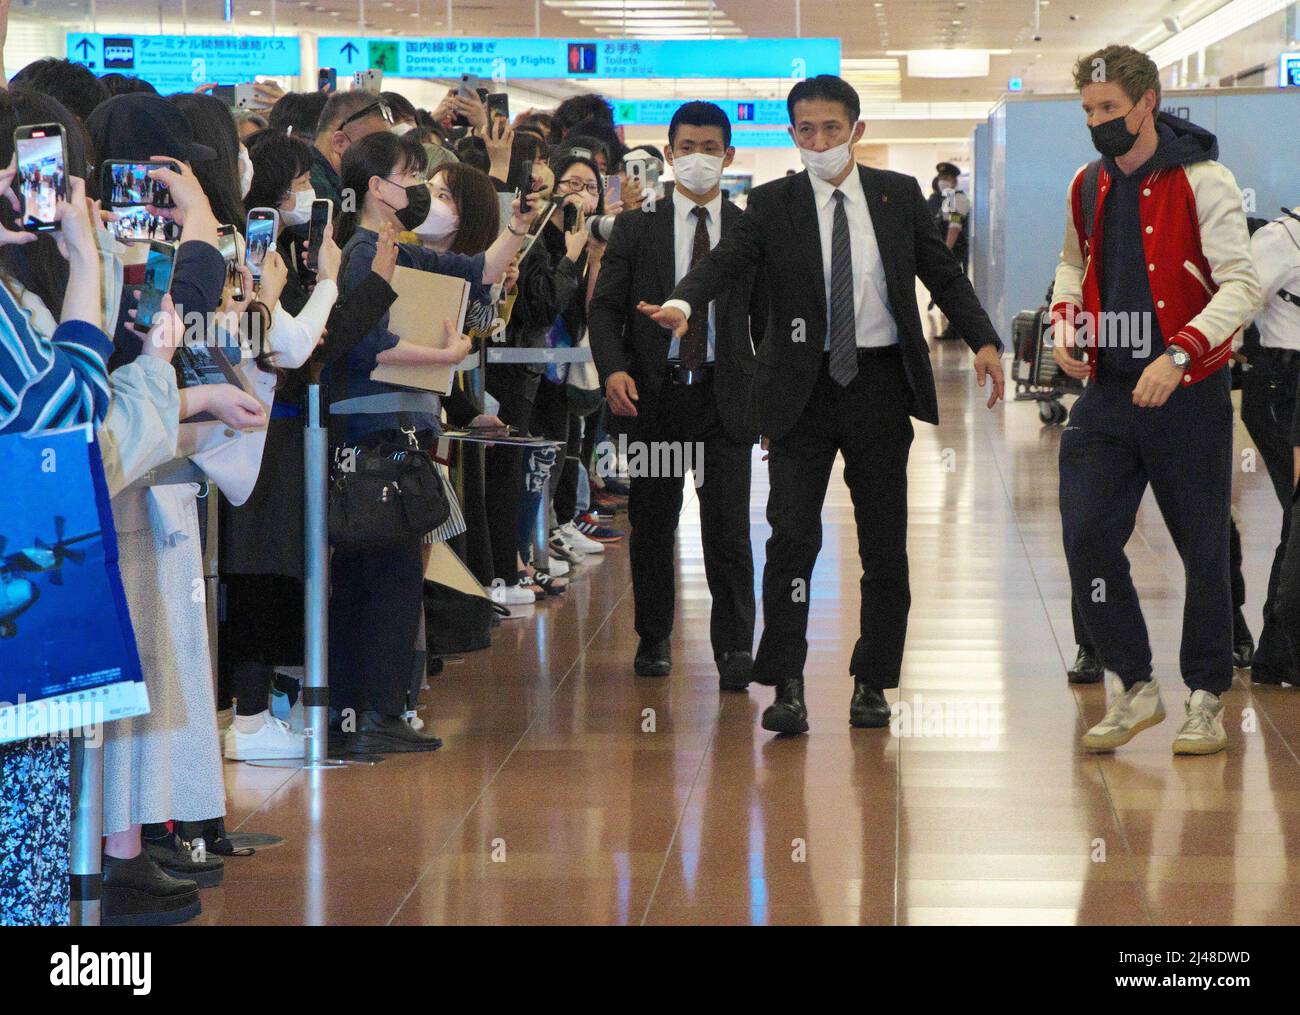 Actor Eddie Redmayne is seen arrives at Tokyo International Airport for  promote his film "Fantastic Beasts: